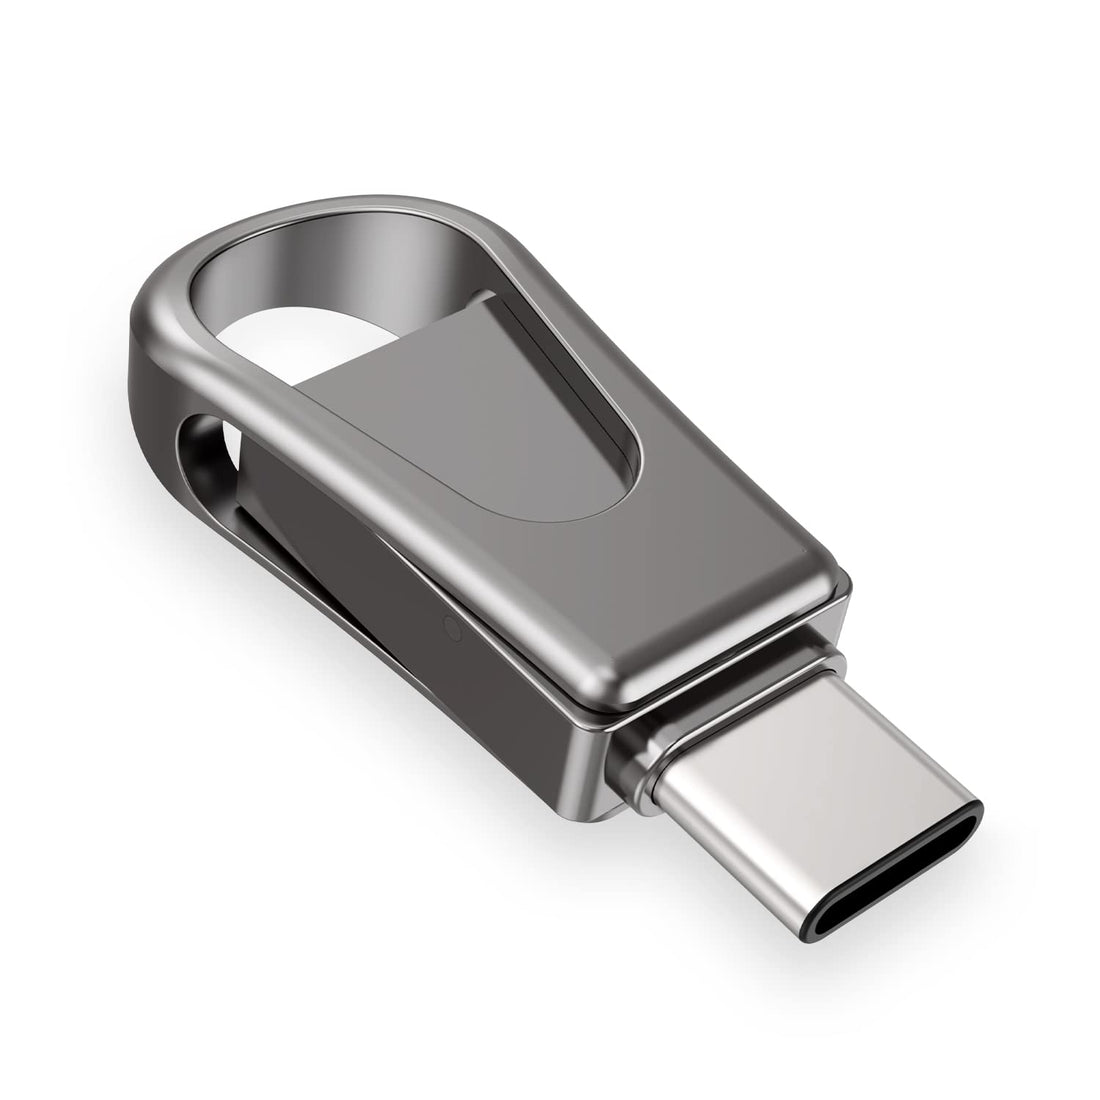 Flash Drive 32GB Dual USB C USB 3.0 OTG with Keychain Hole USB Flash Drive for Laptop PC PDA Smartphones Tablet Samsung Black